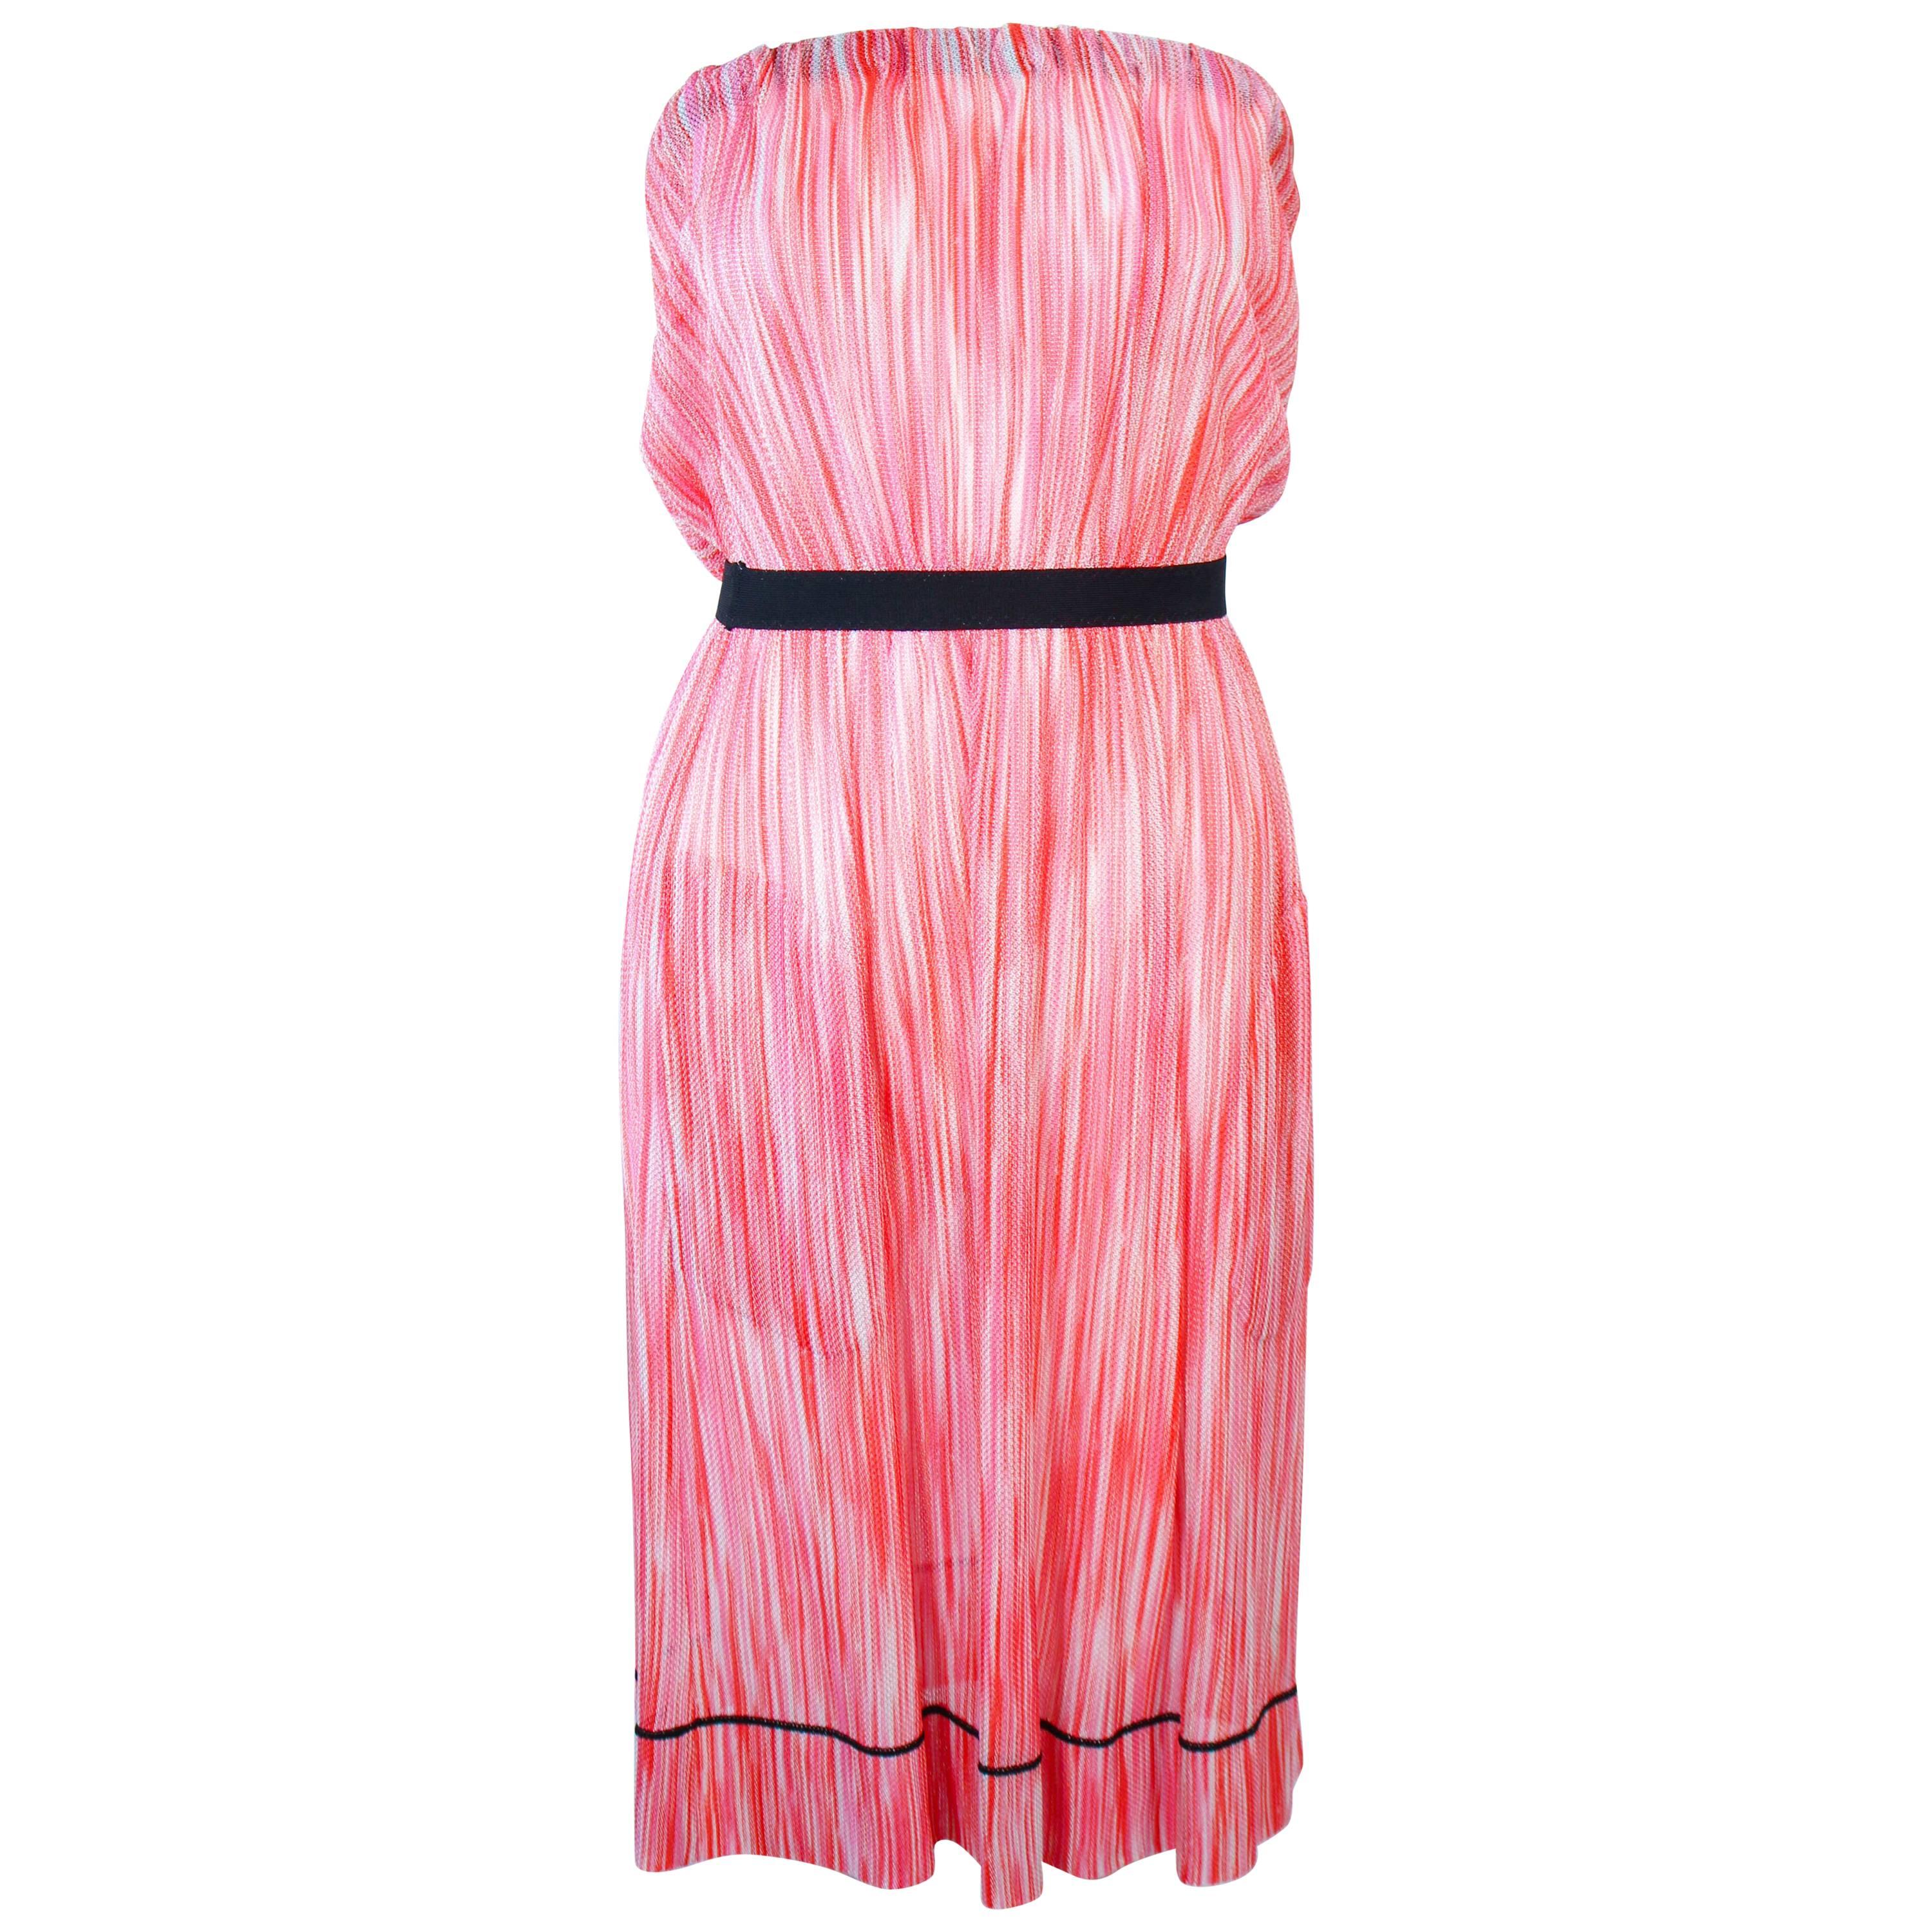 MISSONI White Orange and Pink Knit Strapless Dress Size 4 6